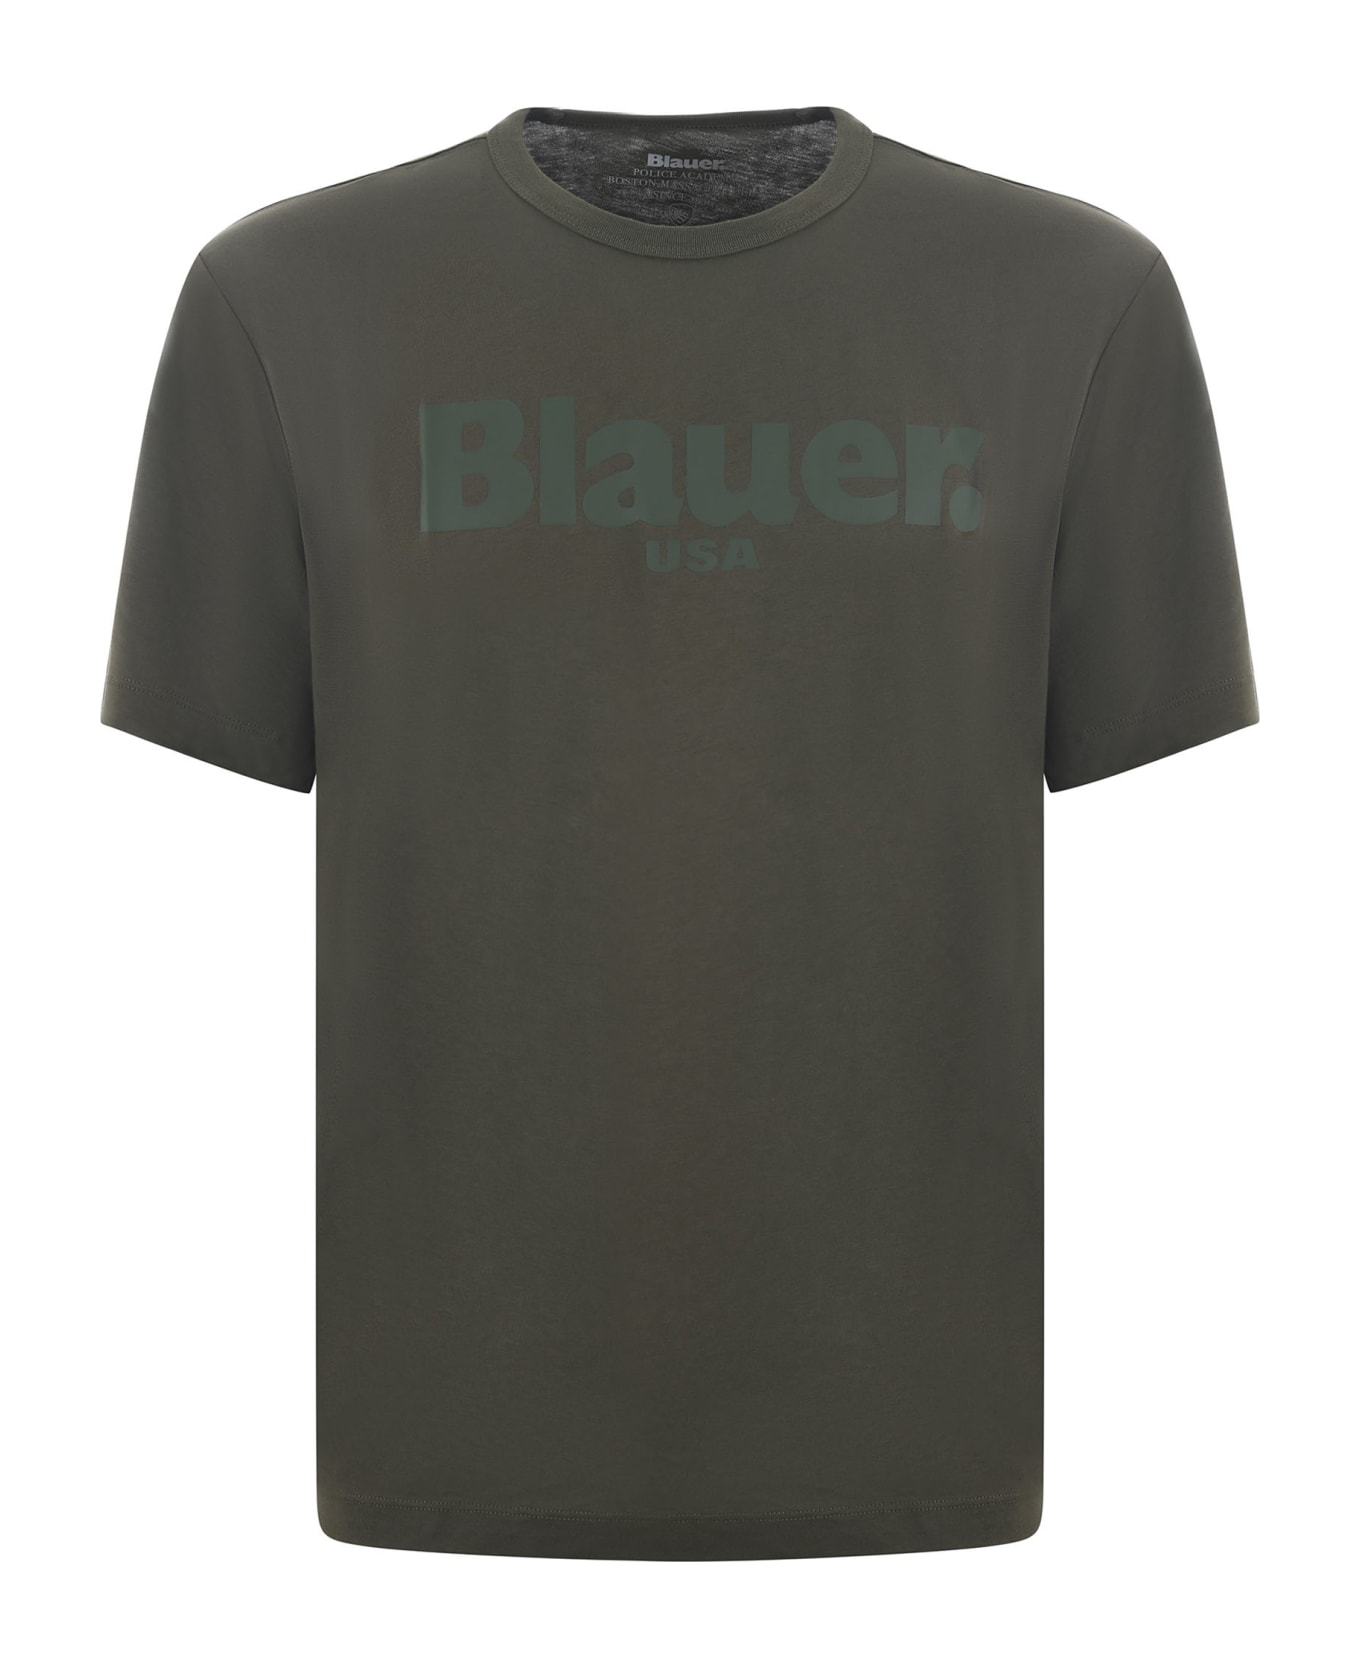 Blauer T-shirt - Verde militare